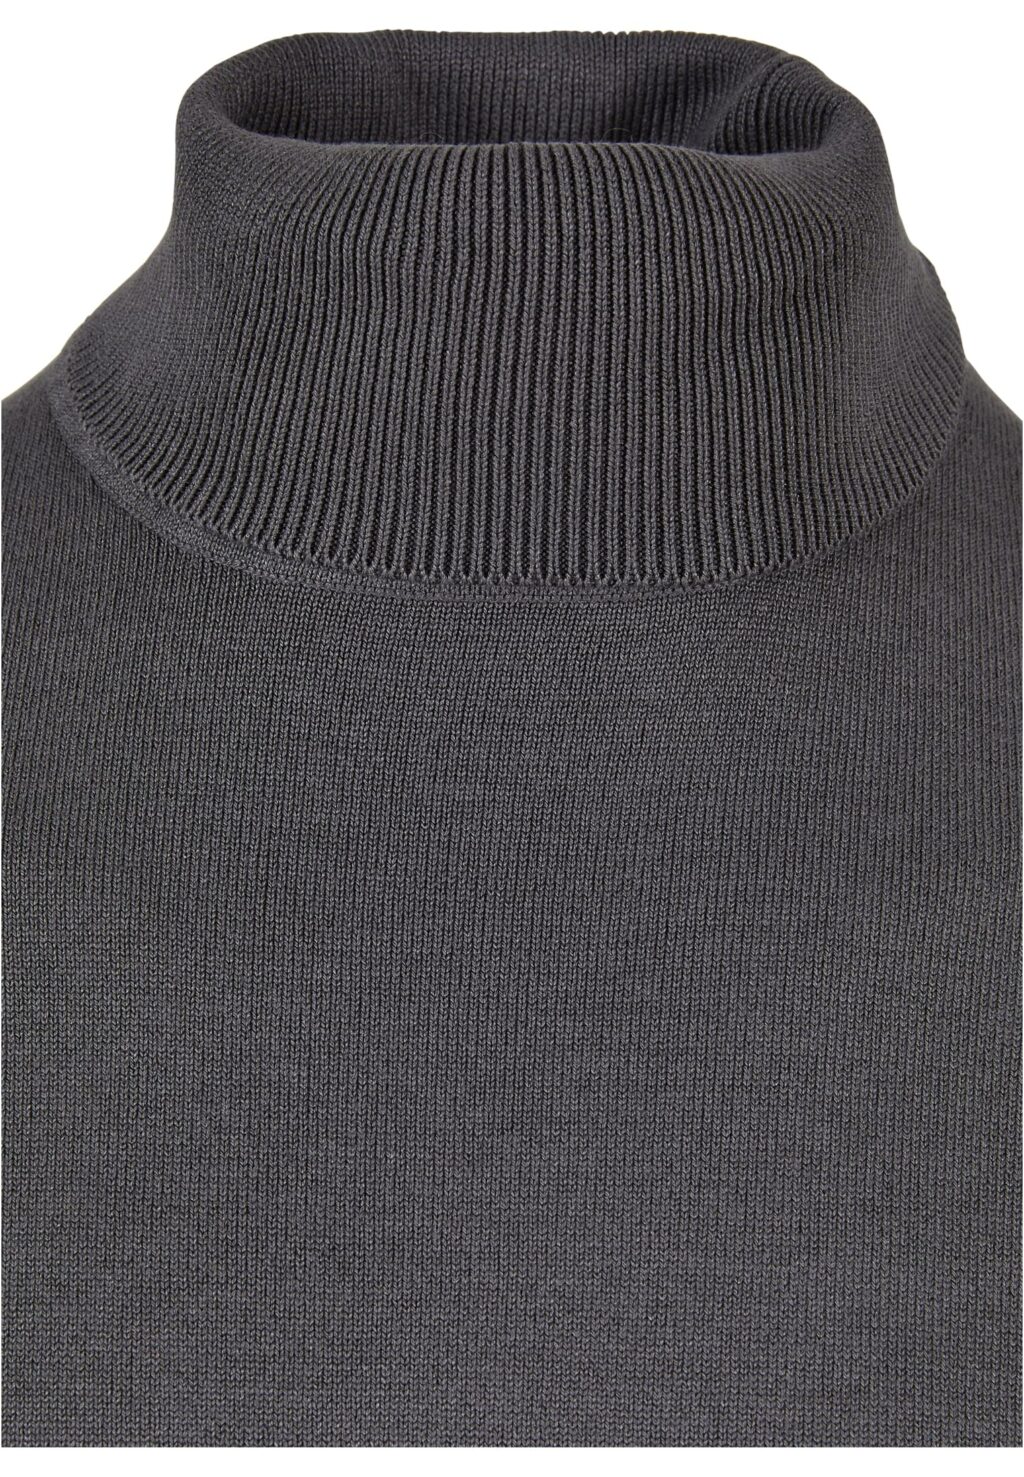 Urban Classics Knitted Turtleneck Sweater darkgrey TB6360